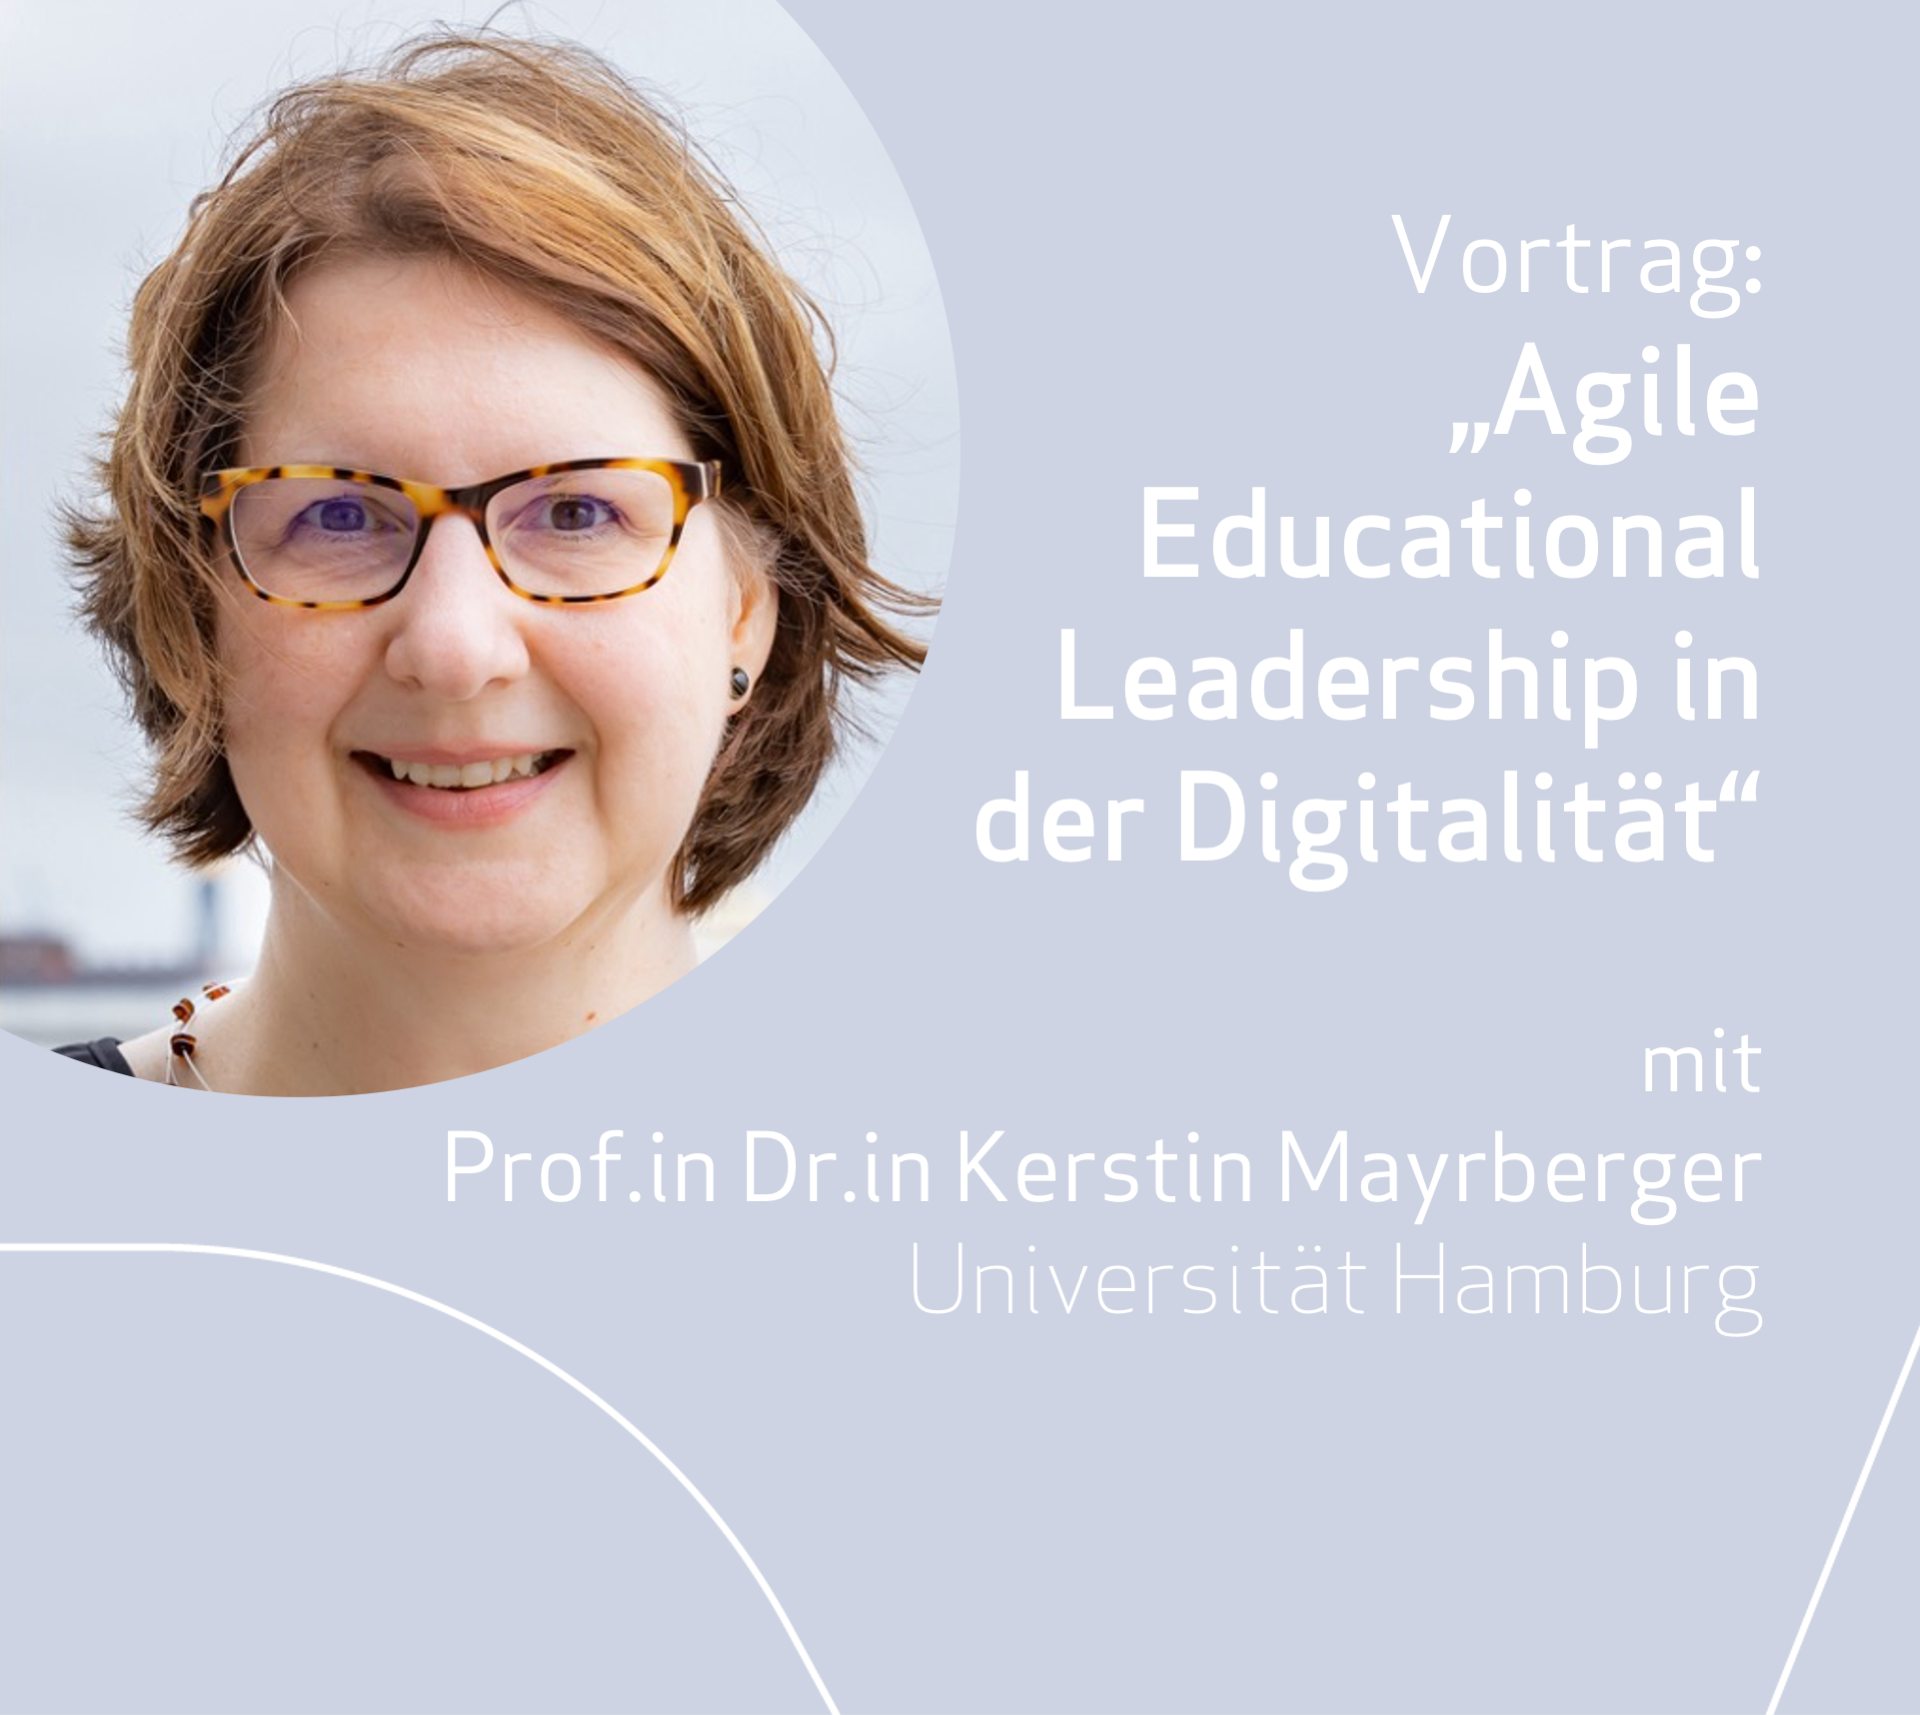 Keynote von Prof.in Dr.in Kerstin Mayrberger: "Agile Educational Leadership in der Digitalität"